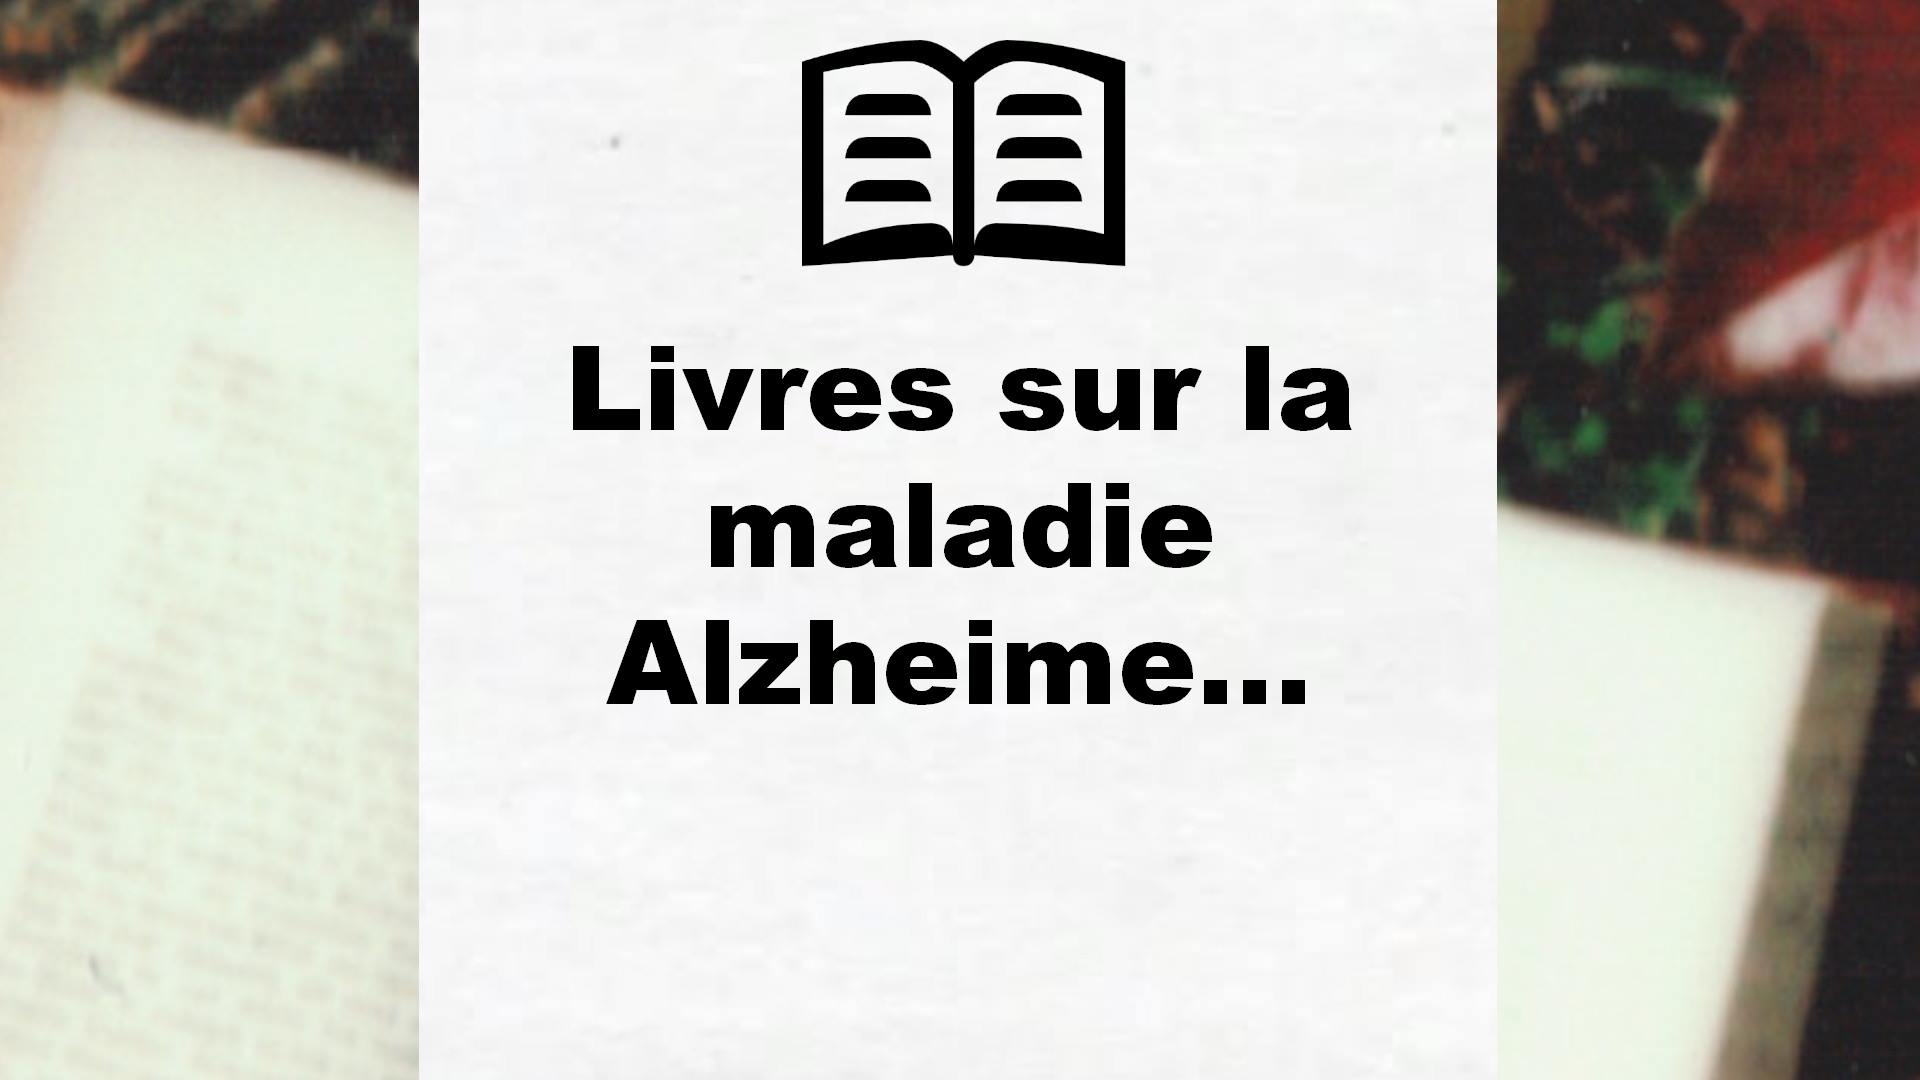 Livres sur la maladie Alzheimer